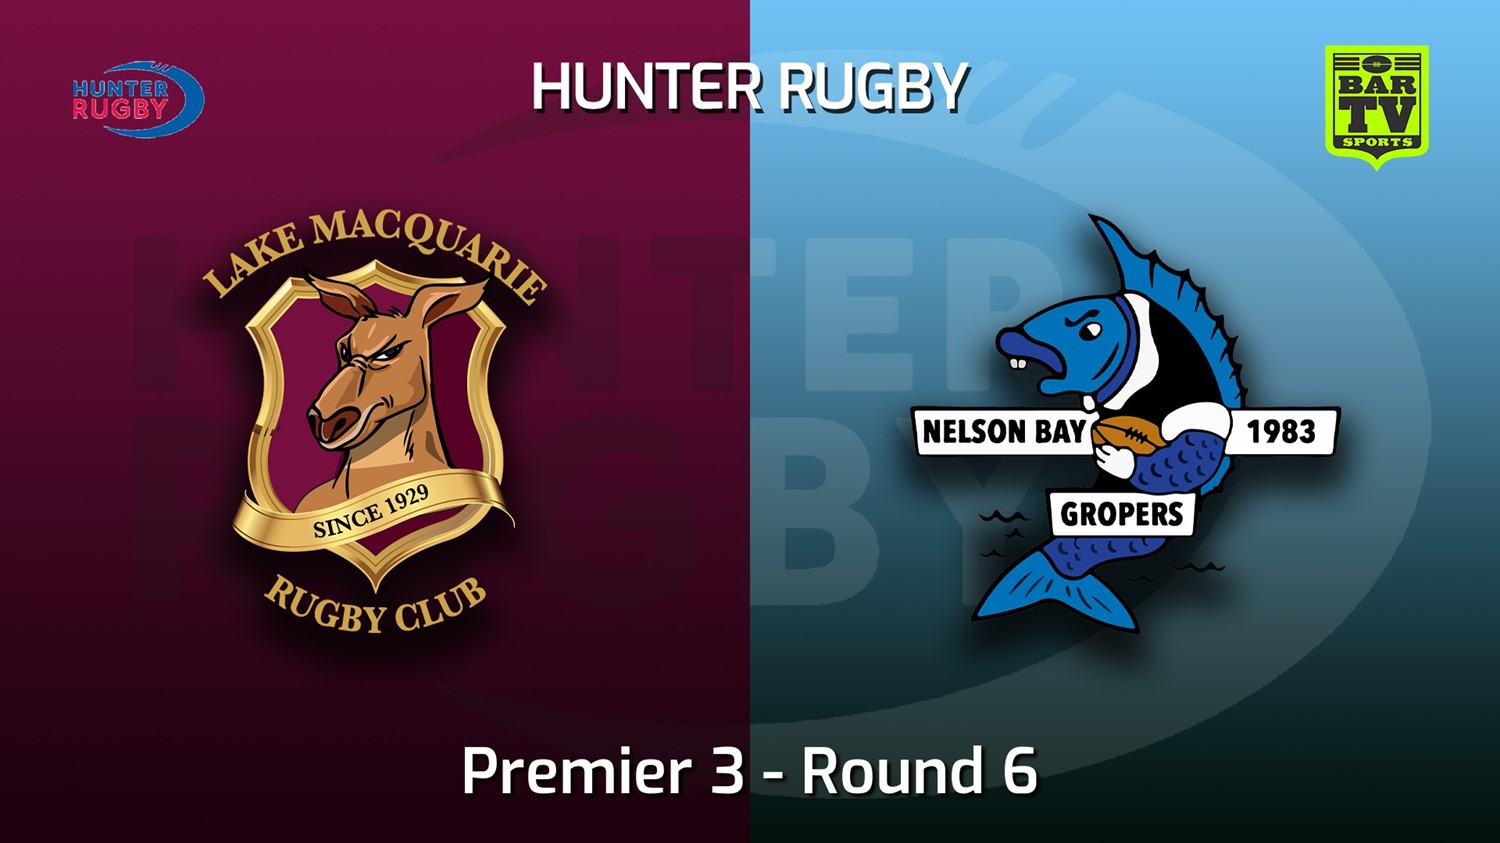 220528-Hunter Rugby Round 6 - Premier 3 - Lake Macquarie v Nelson Bay Gropers Slate Image